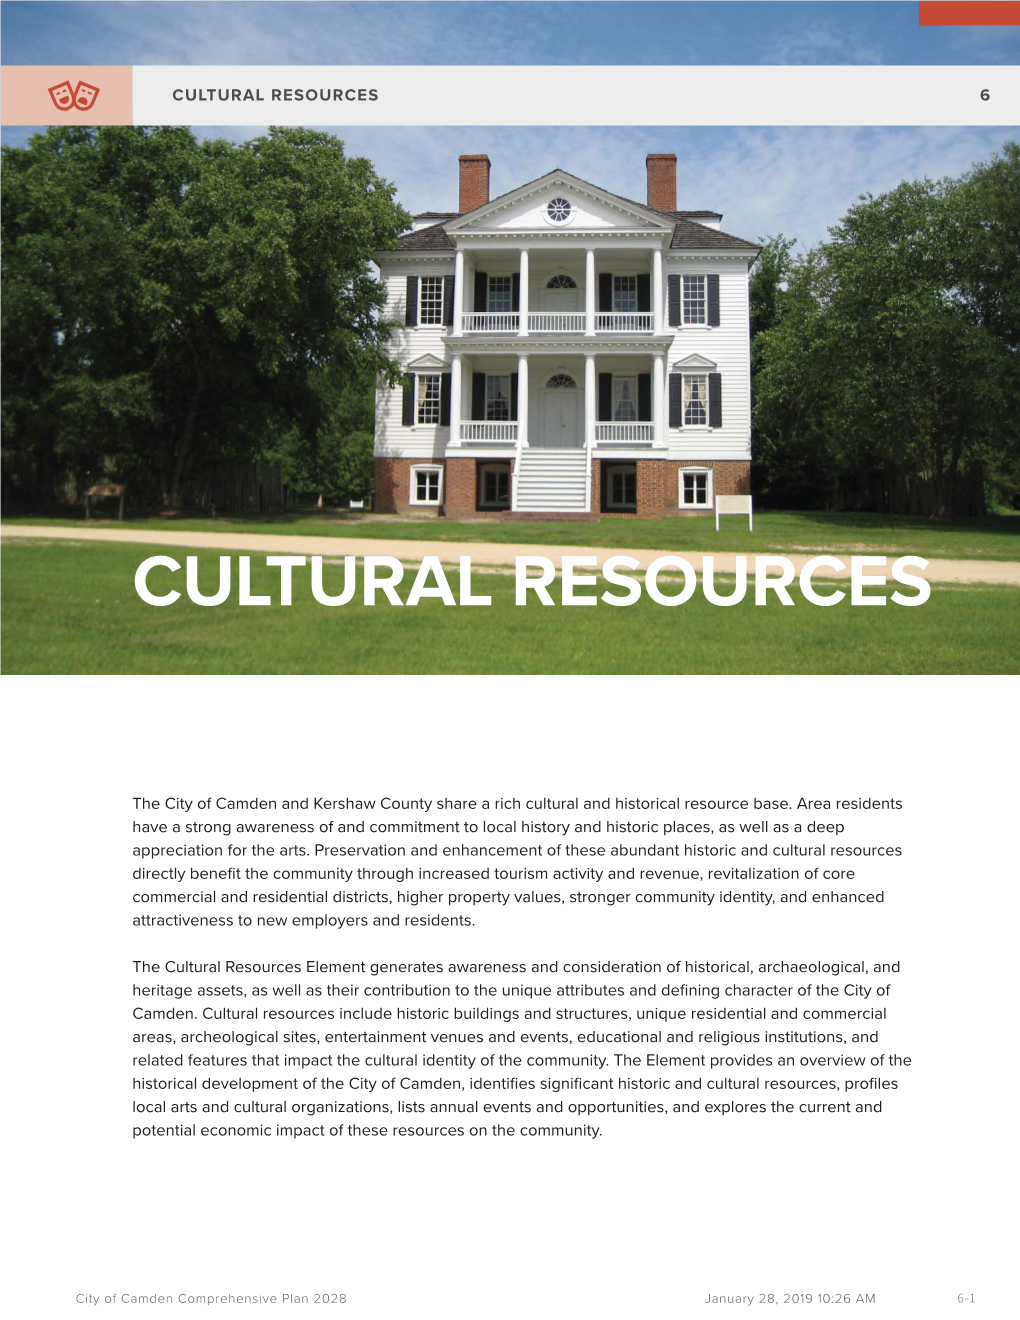 Cultural Resources Element